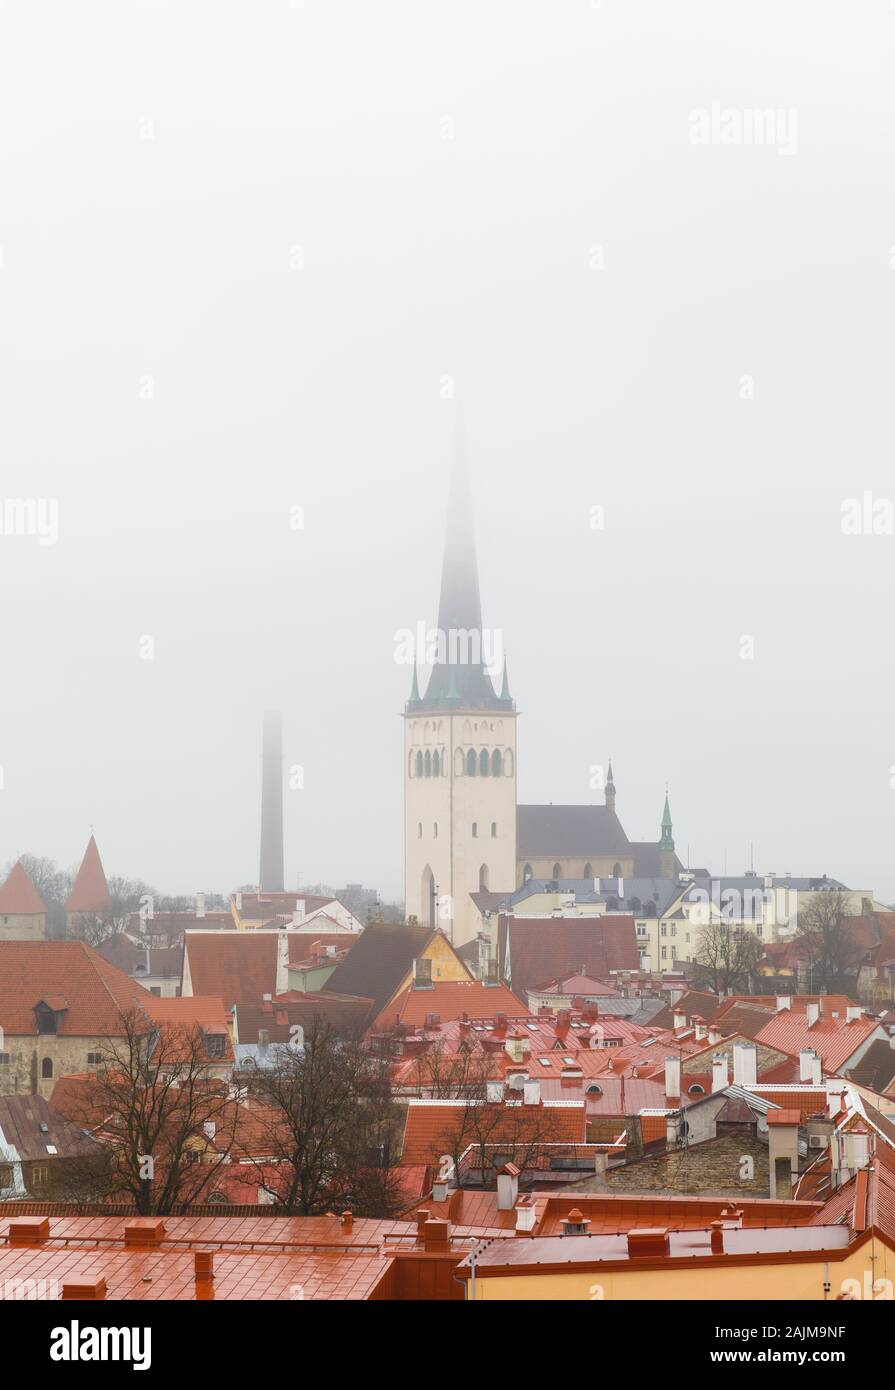 Cityscape of Tallinn old town in a mist Stock Photo